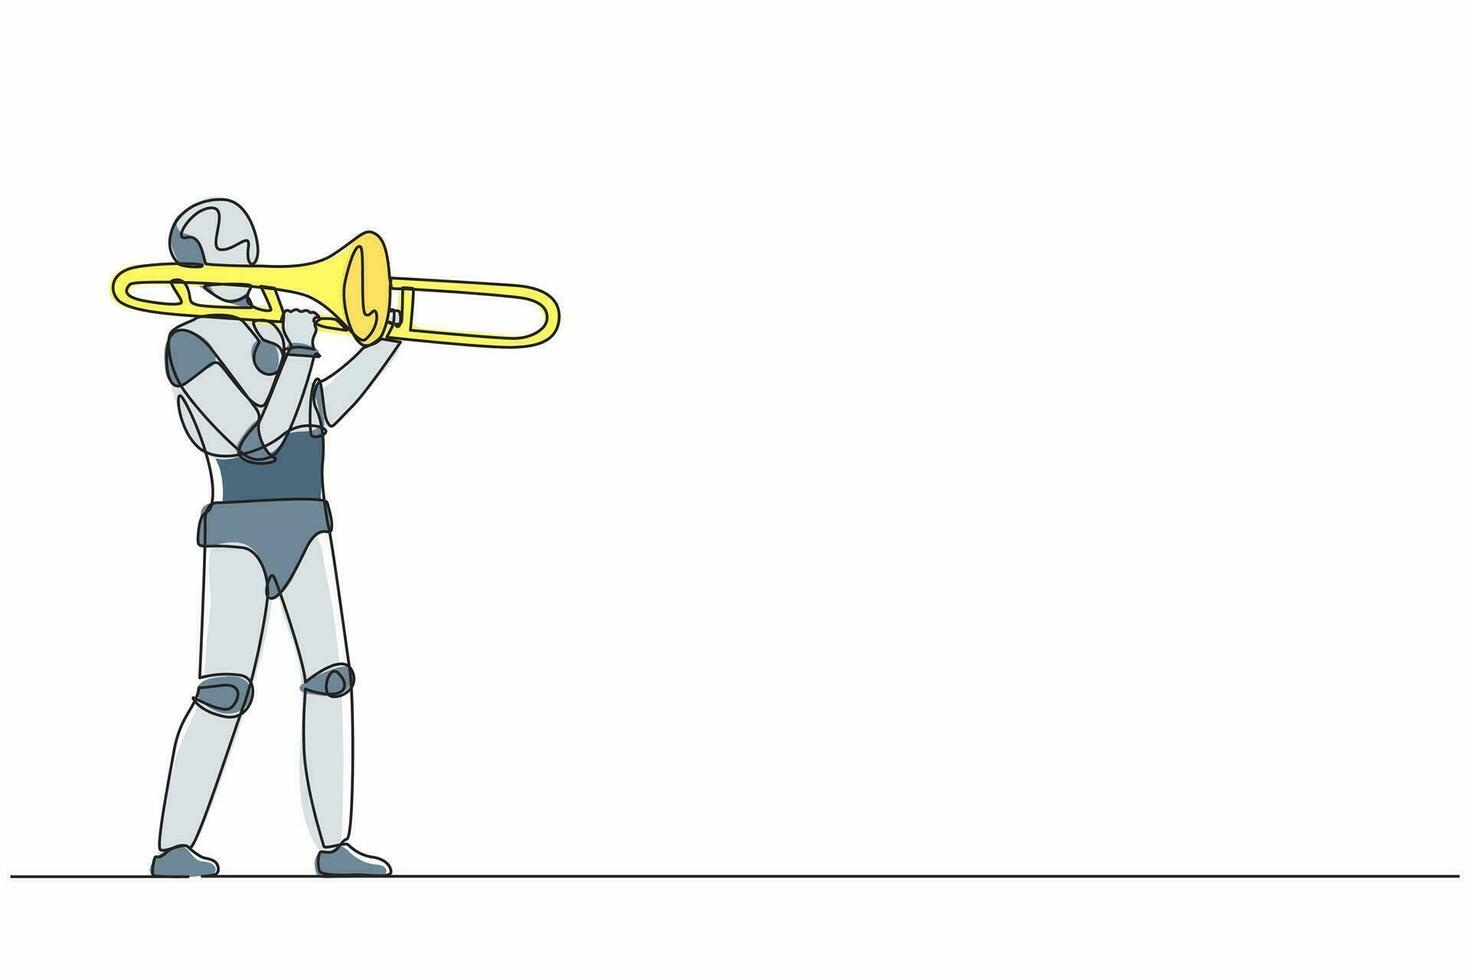 kontinuerlig en rad ritning robot spela trombon blåsinstrument på klassisk musik händelse. humanoid robot cybernetisk organism. framtida robotutveckling. enda linje design vektorgrafisk illustration vektor